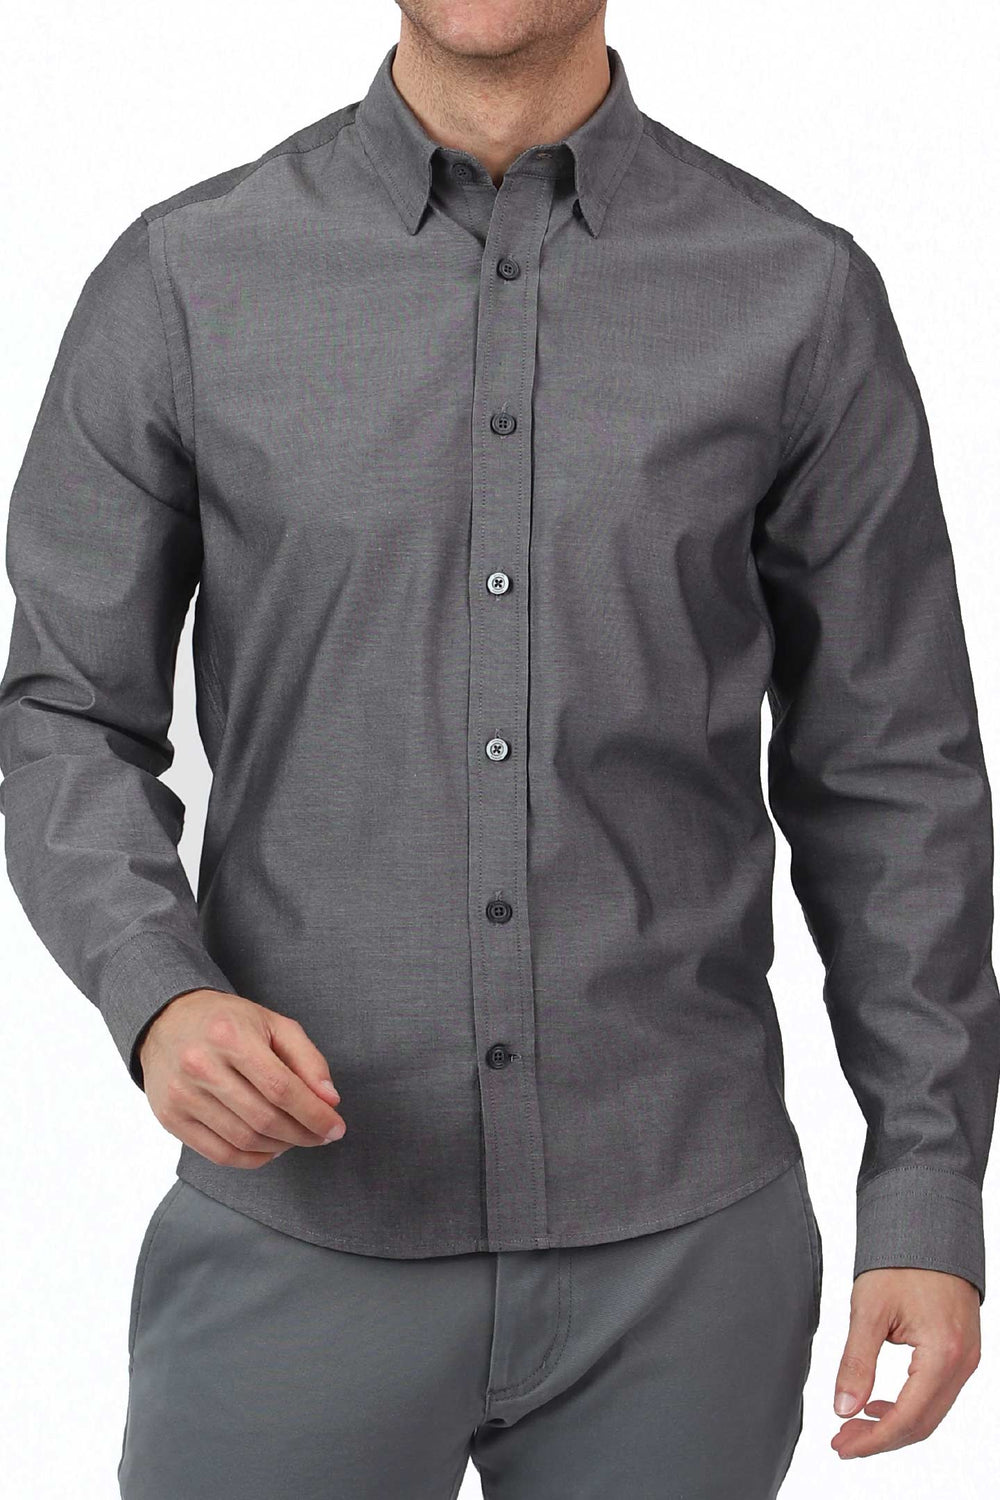 Buy Charcoal Stretch Button-Down Shirt for Short Men | Ash & Erie   Stretch Shirt